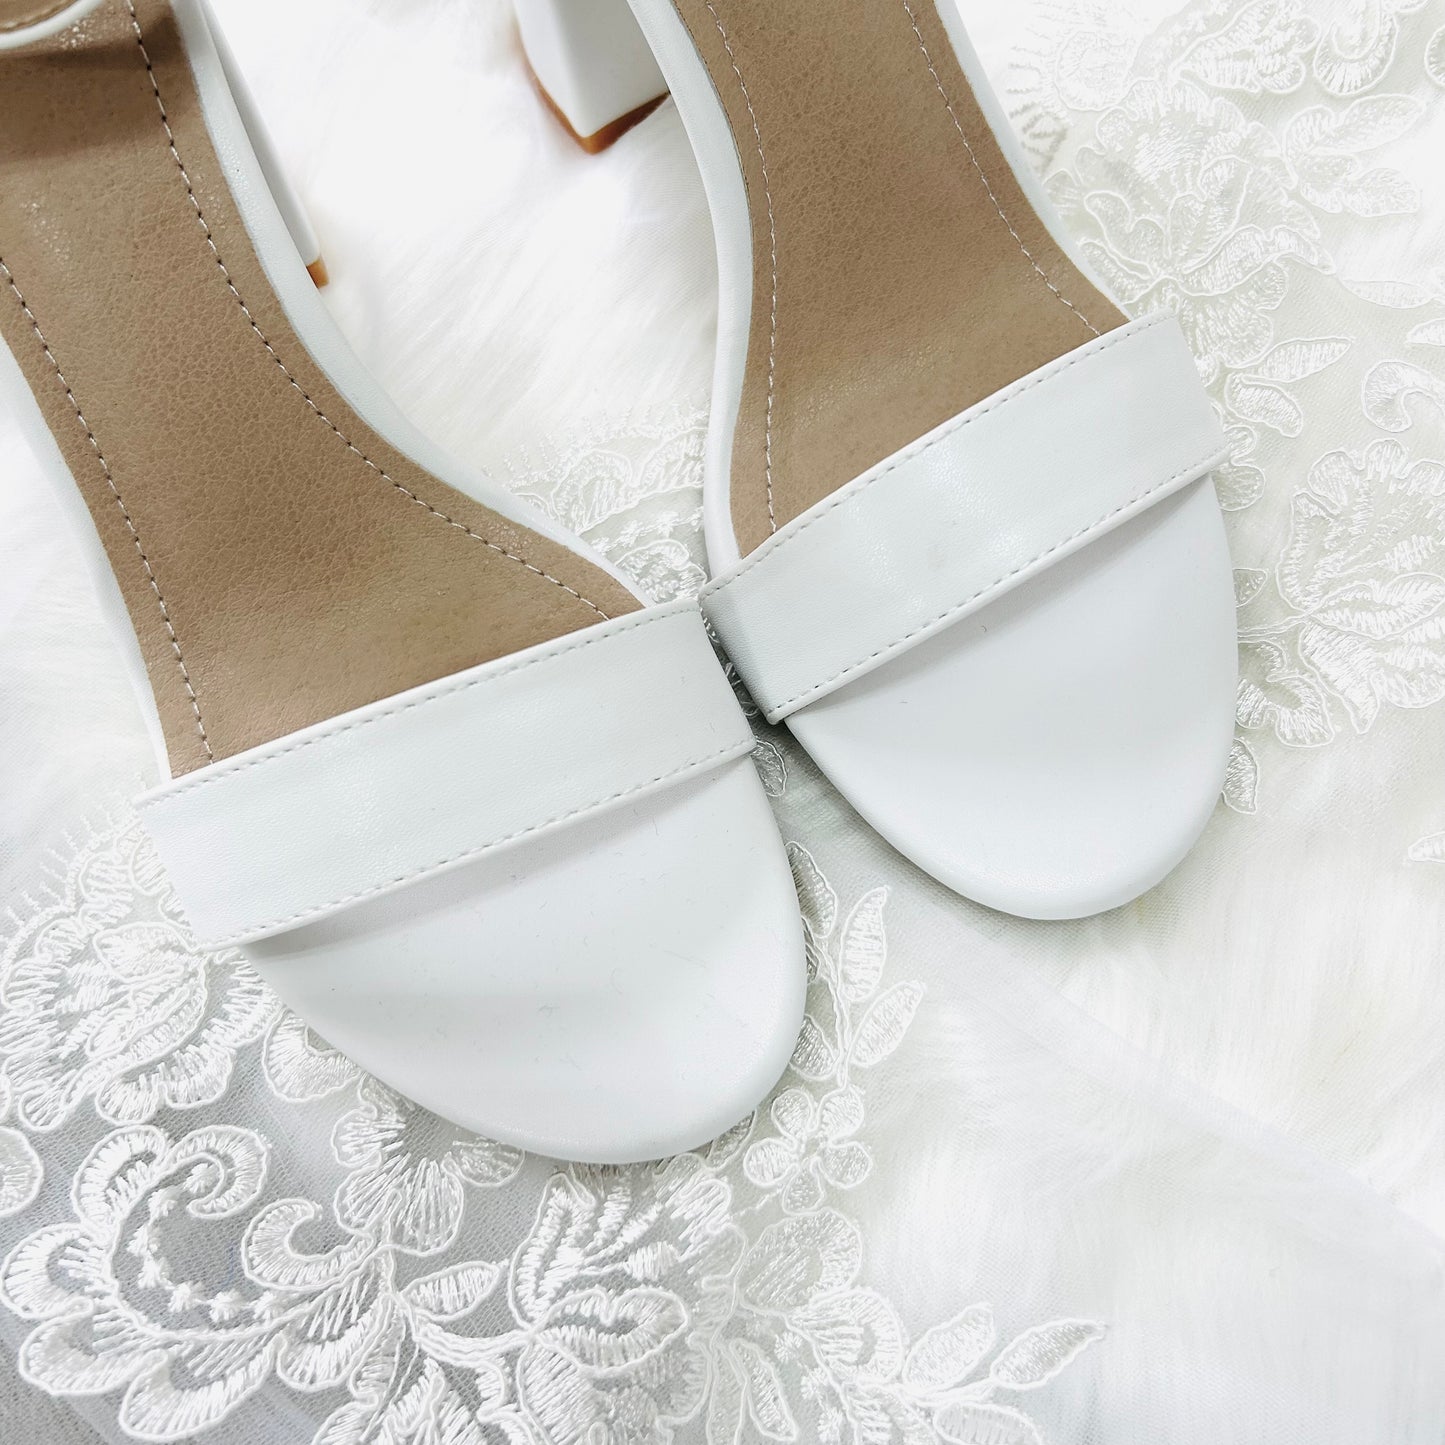 hetty-wedding-shoes